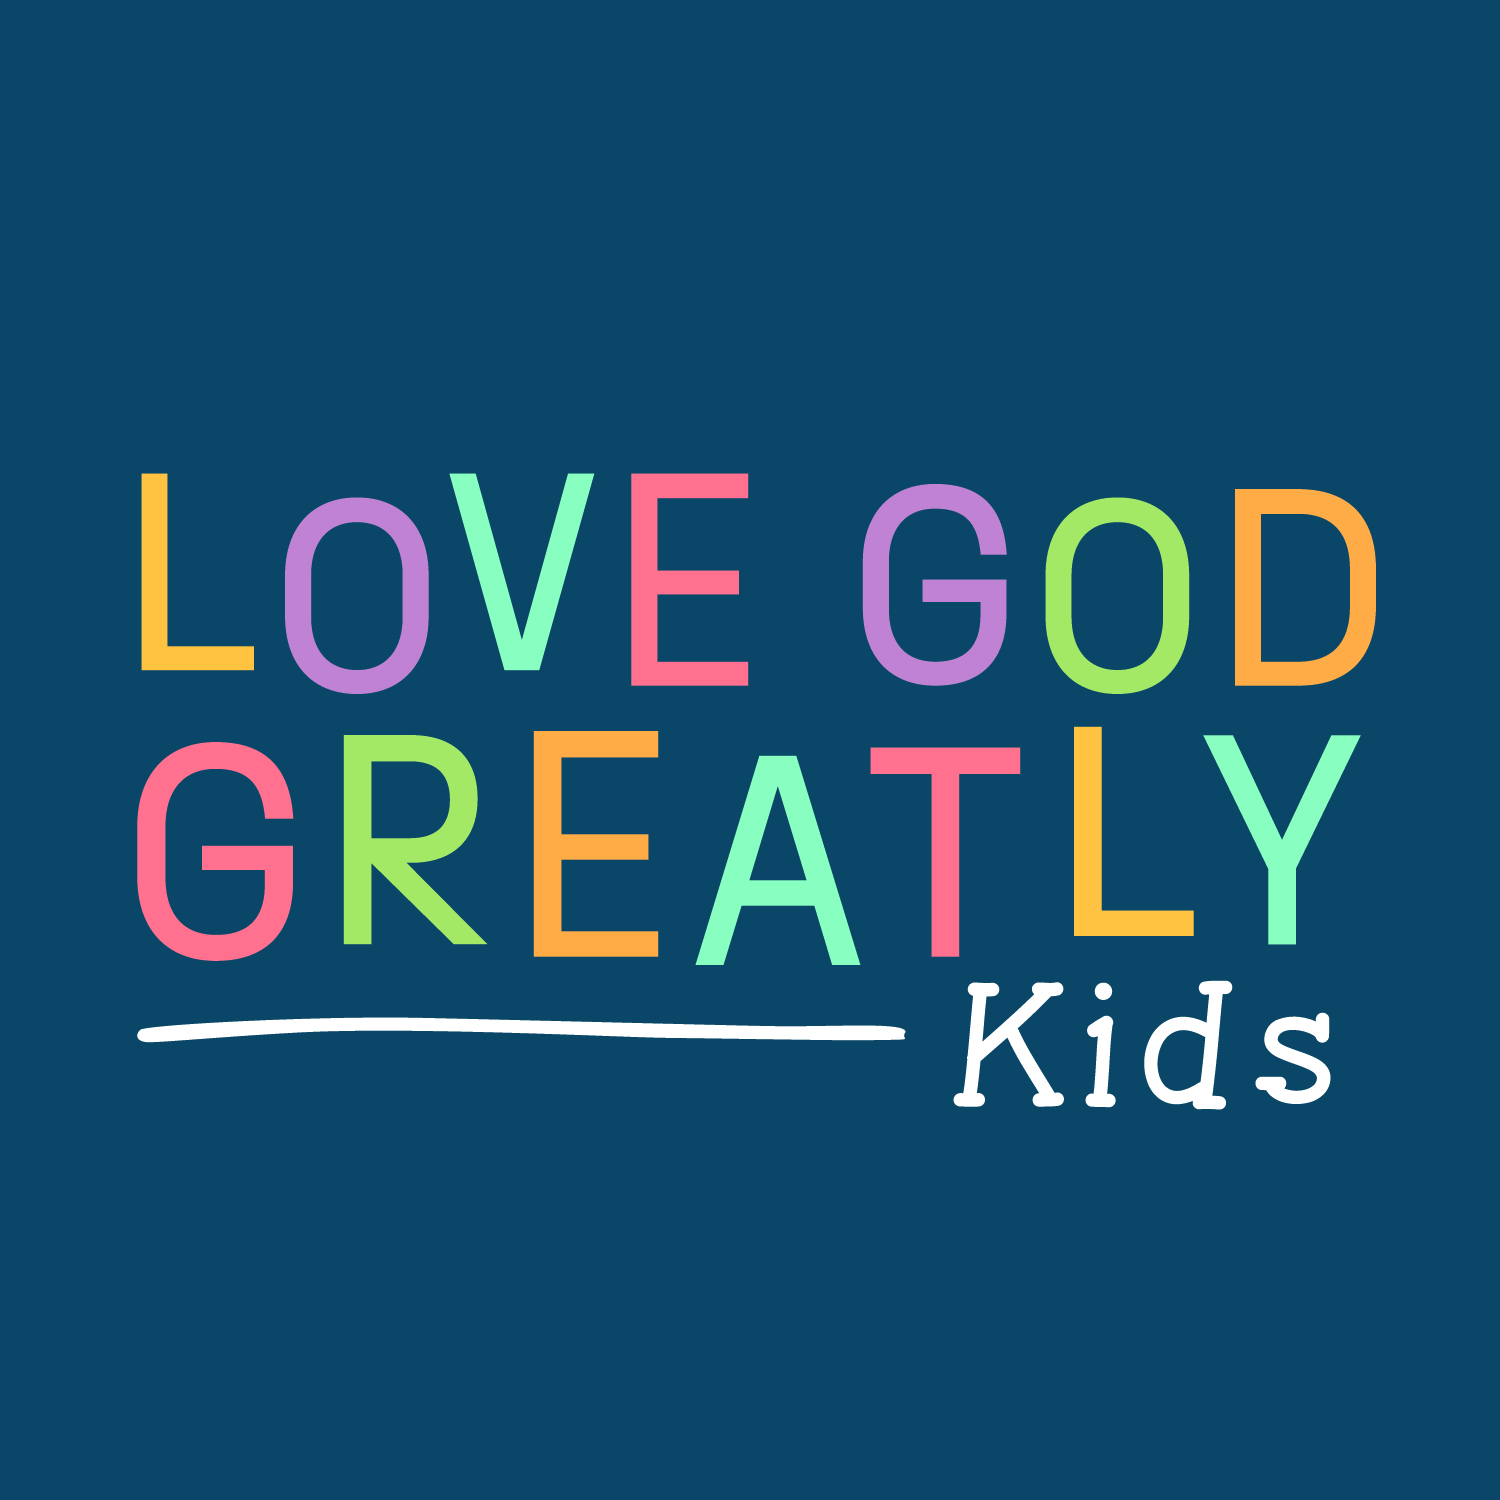 Love God Greatly Kids